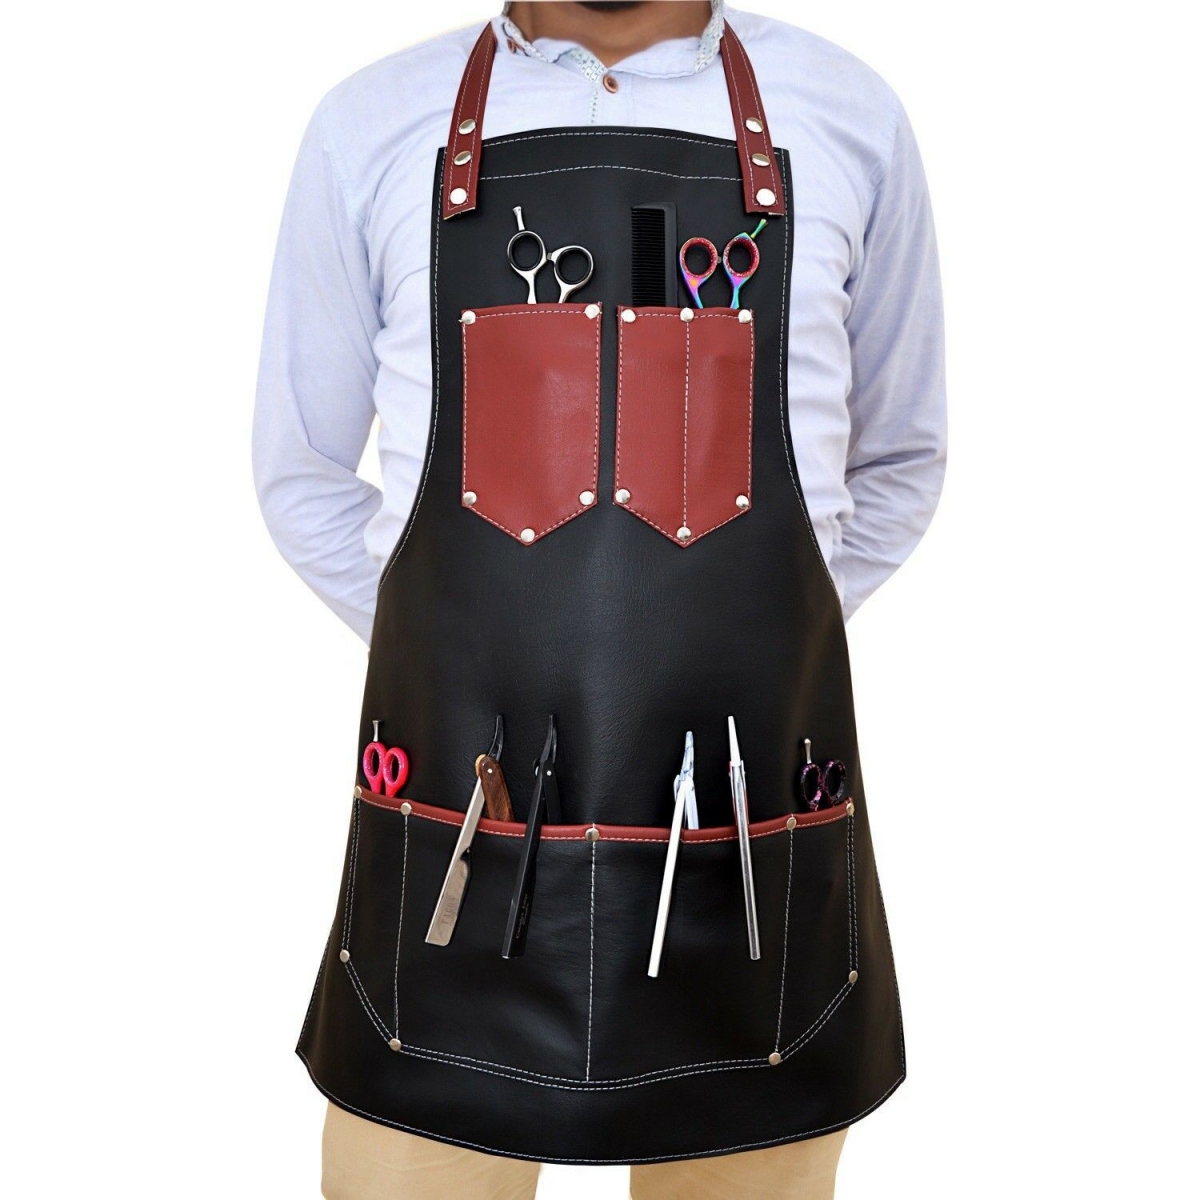 Professional Barber PU leather apron 